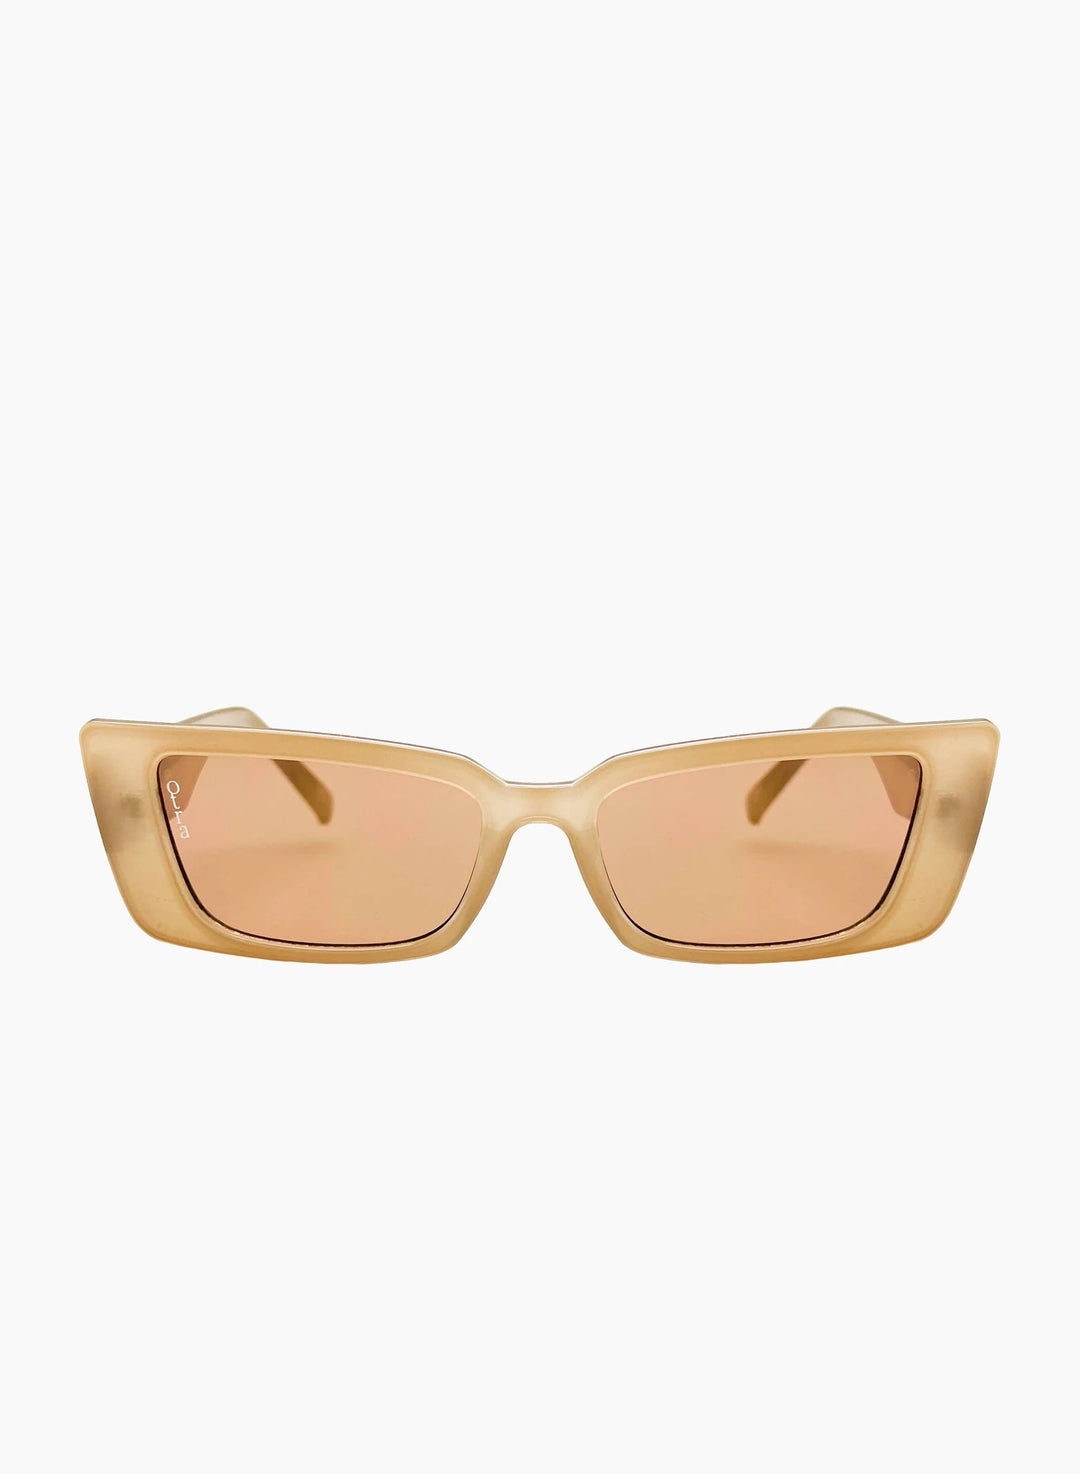 Otra Eyewear - Evie Sunglasses in Tan/Nude